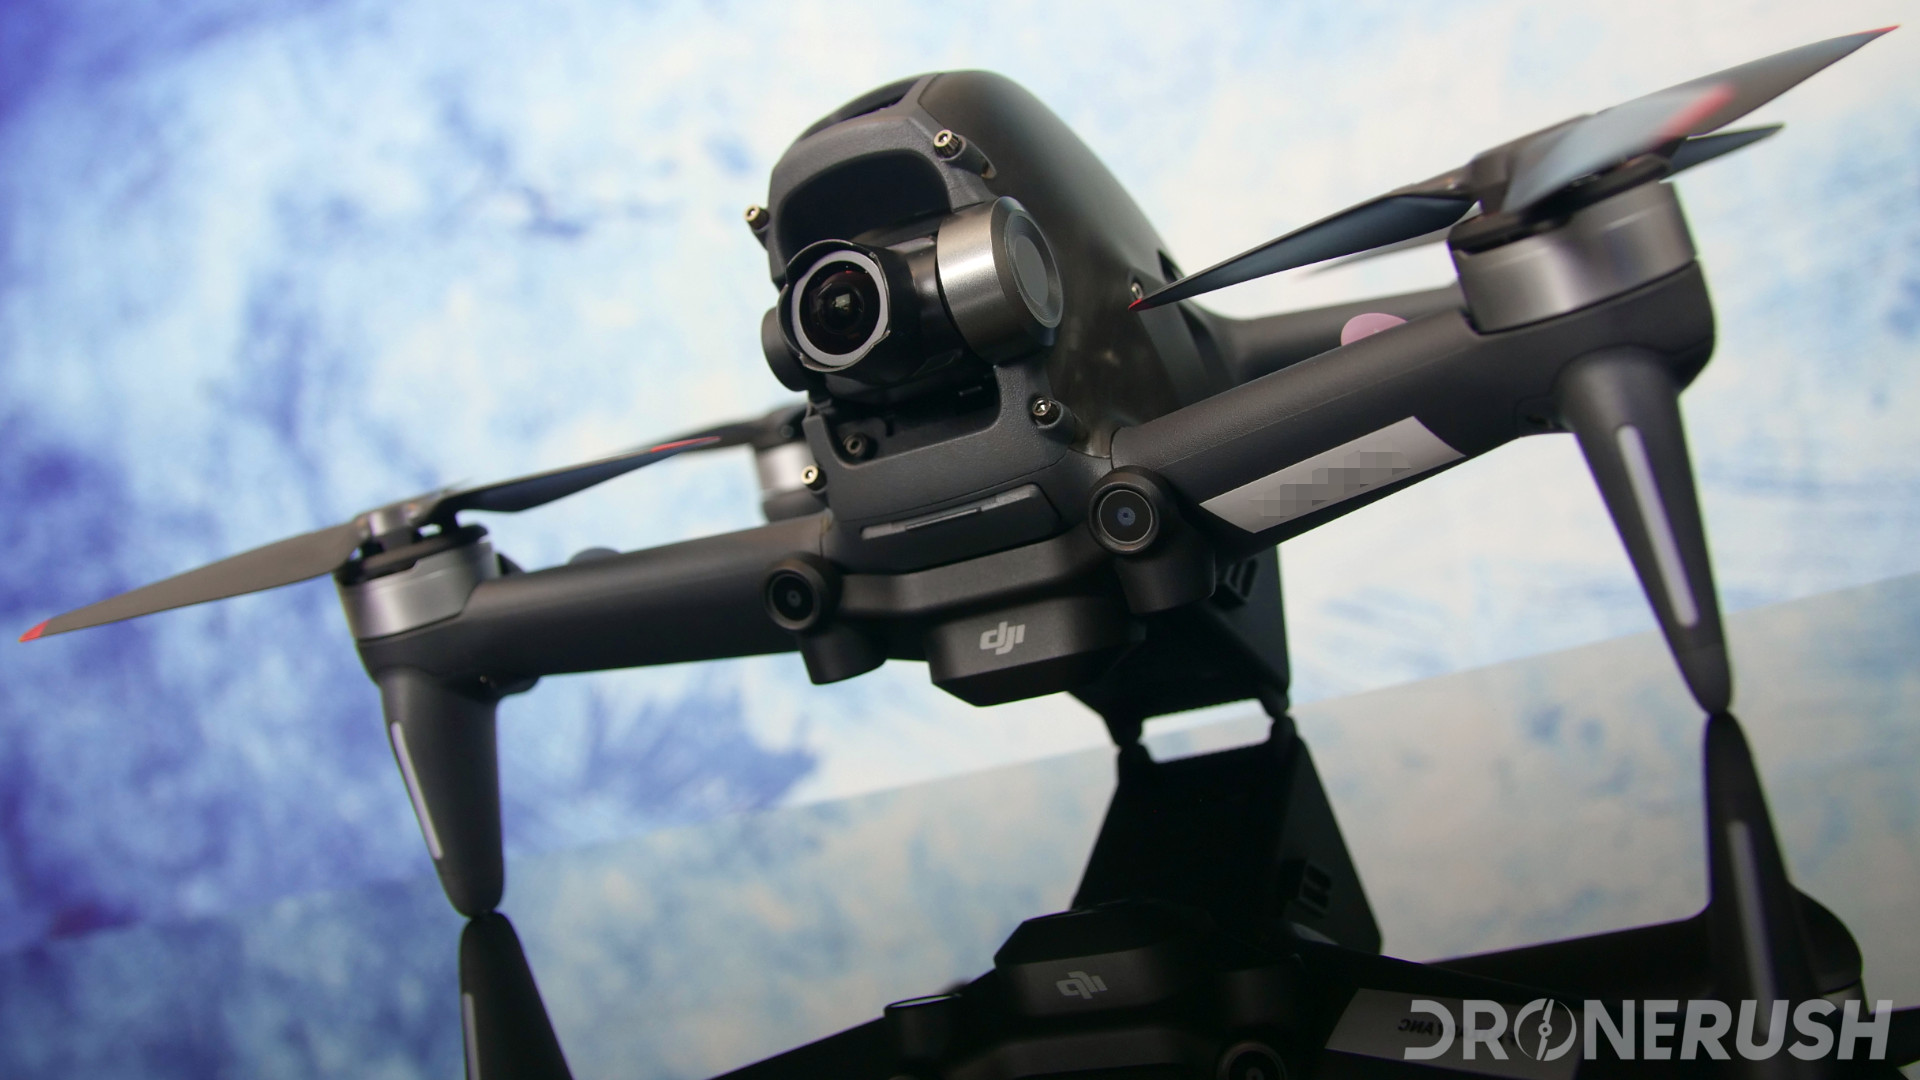 Review: DJI's New FPV Drone is Effortless, Exhilarating Fun - IEEE